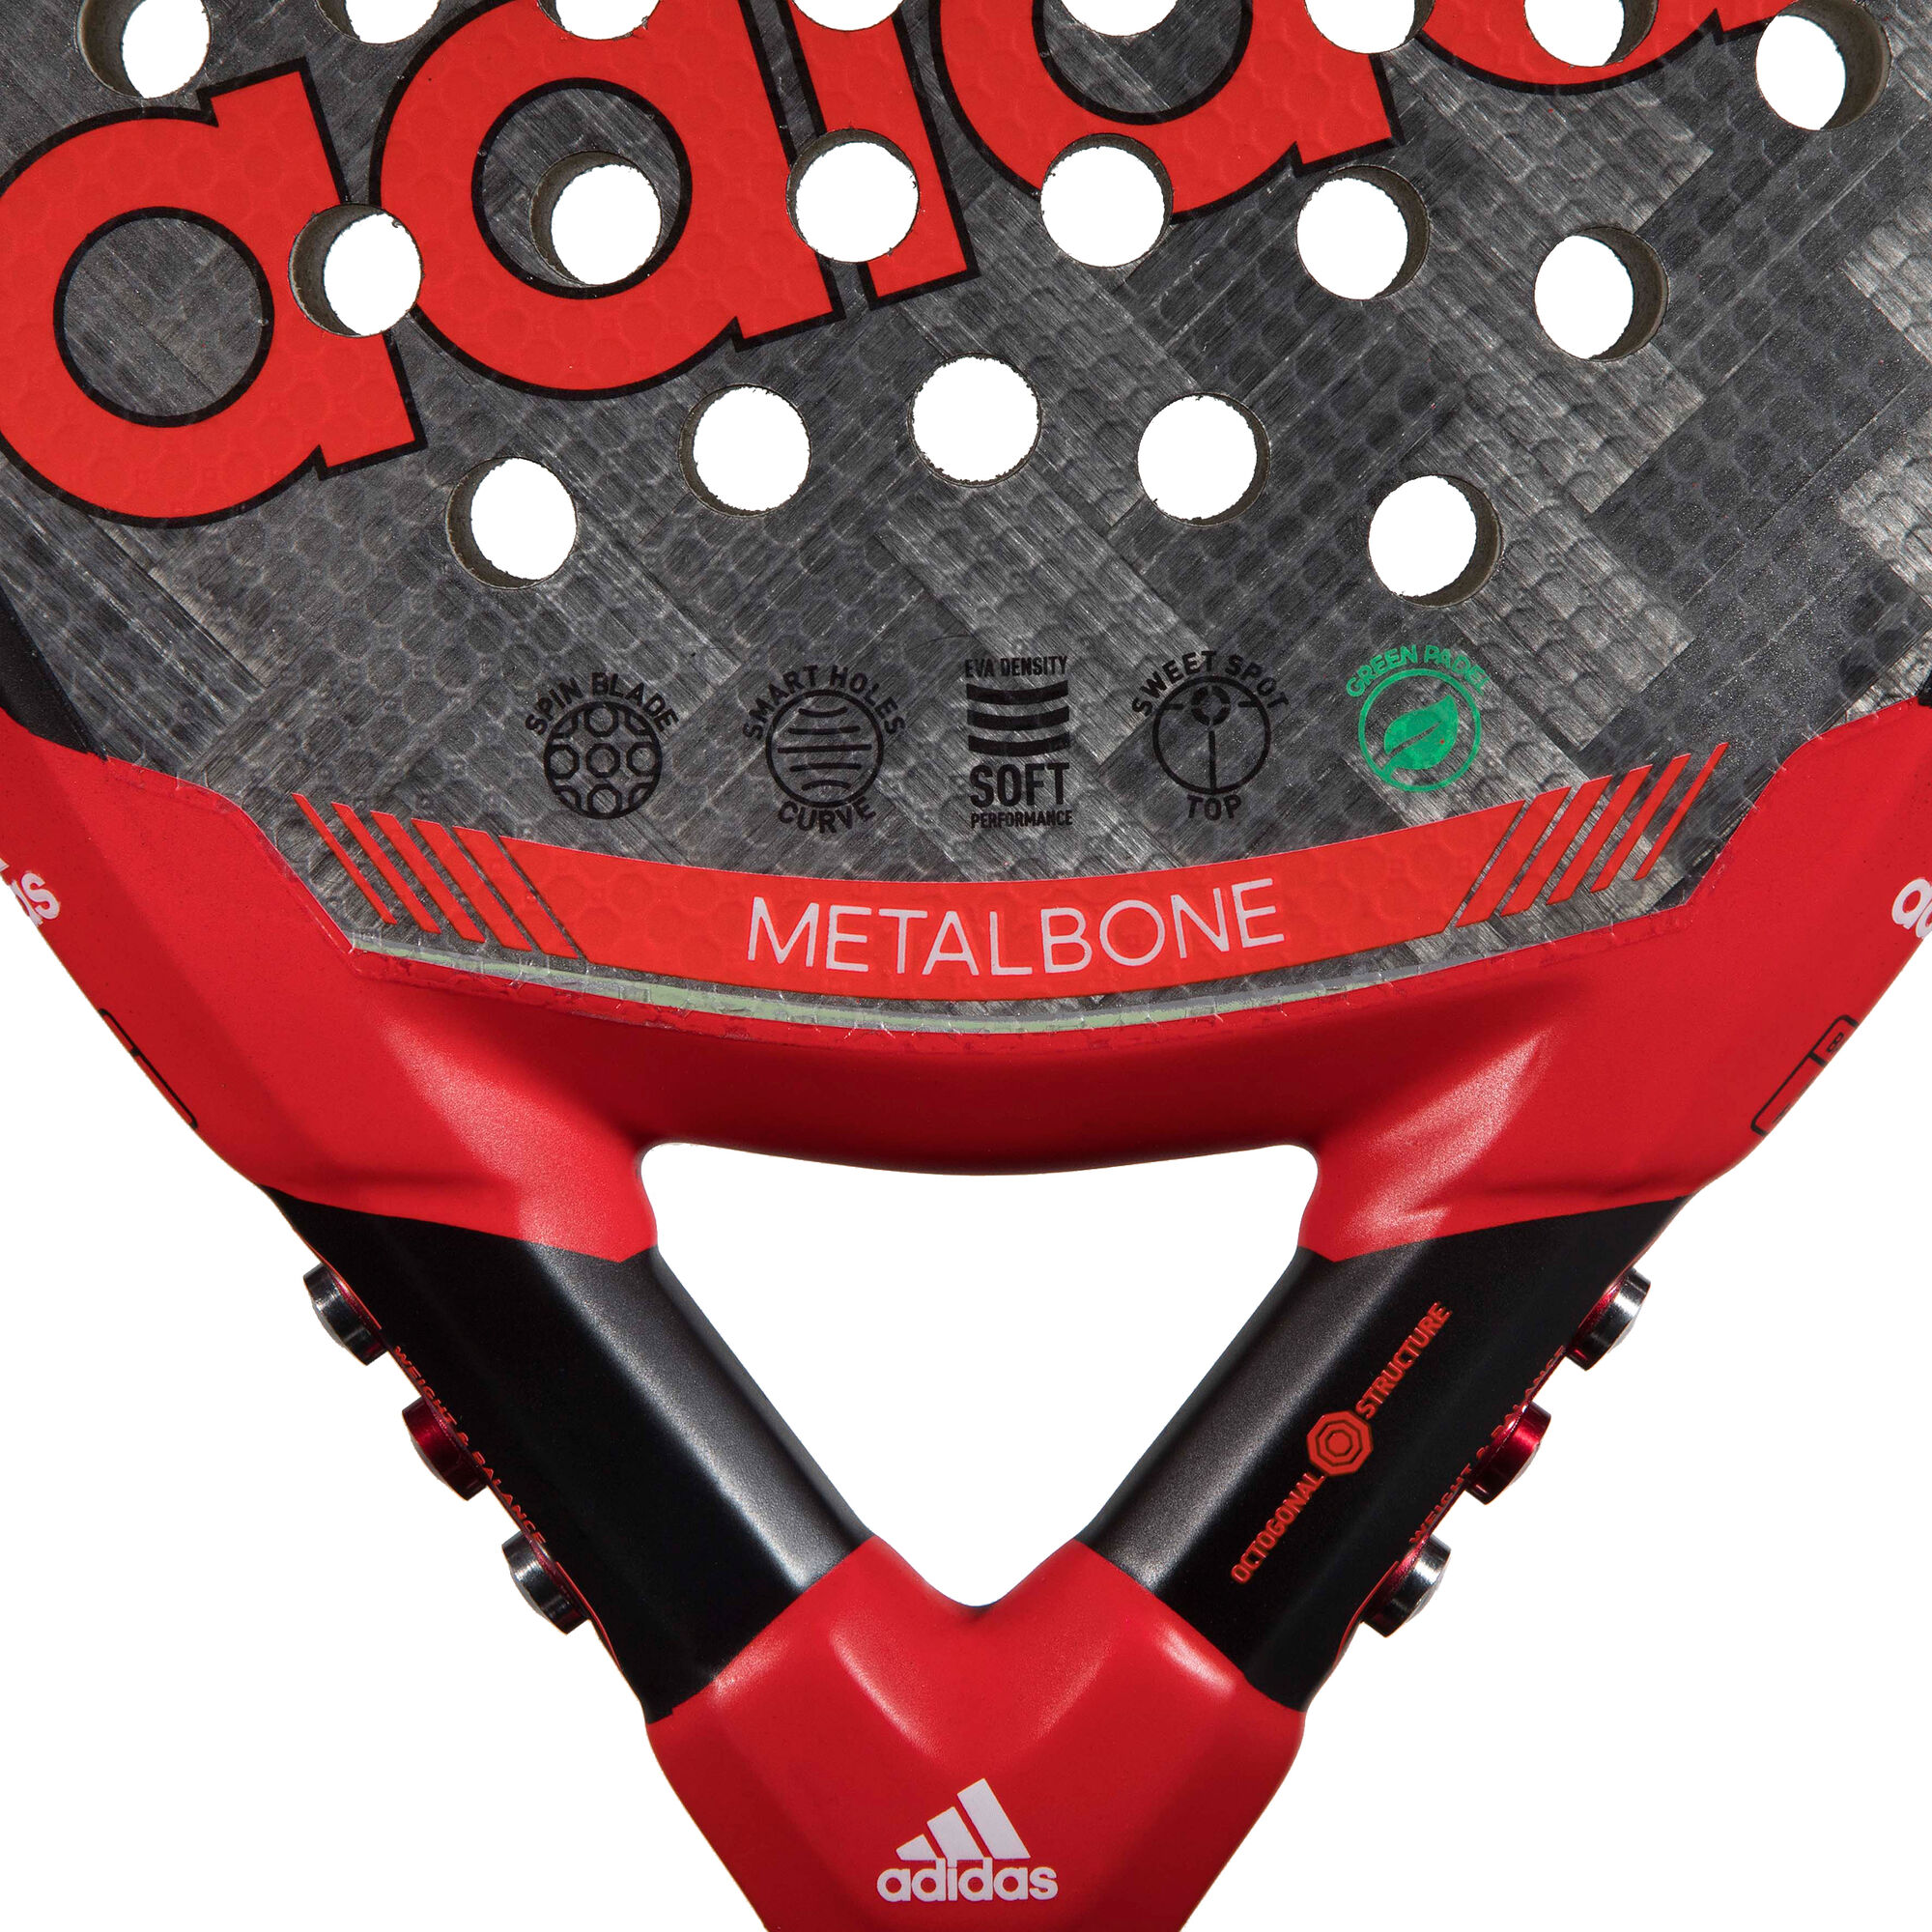 adidas Metalbone 3.1 compra online |